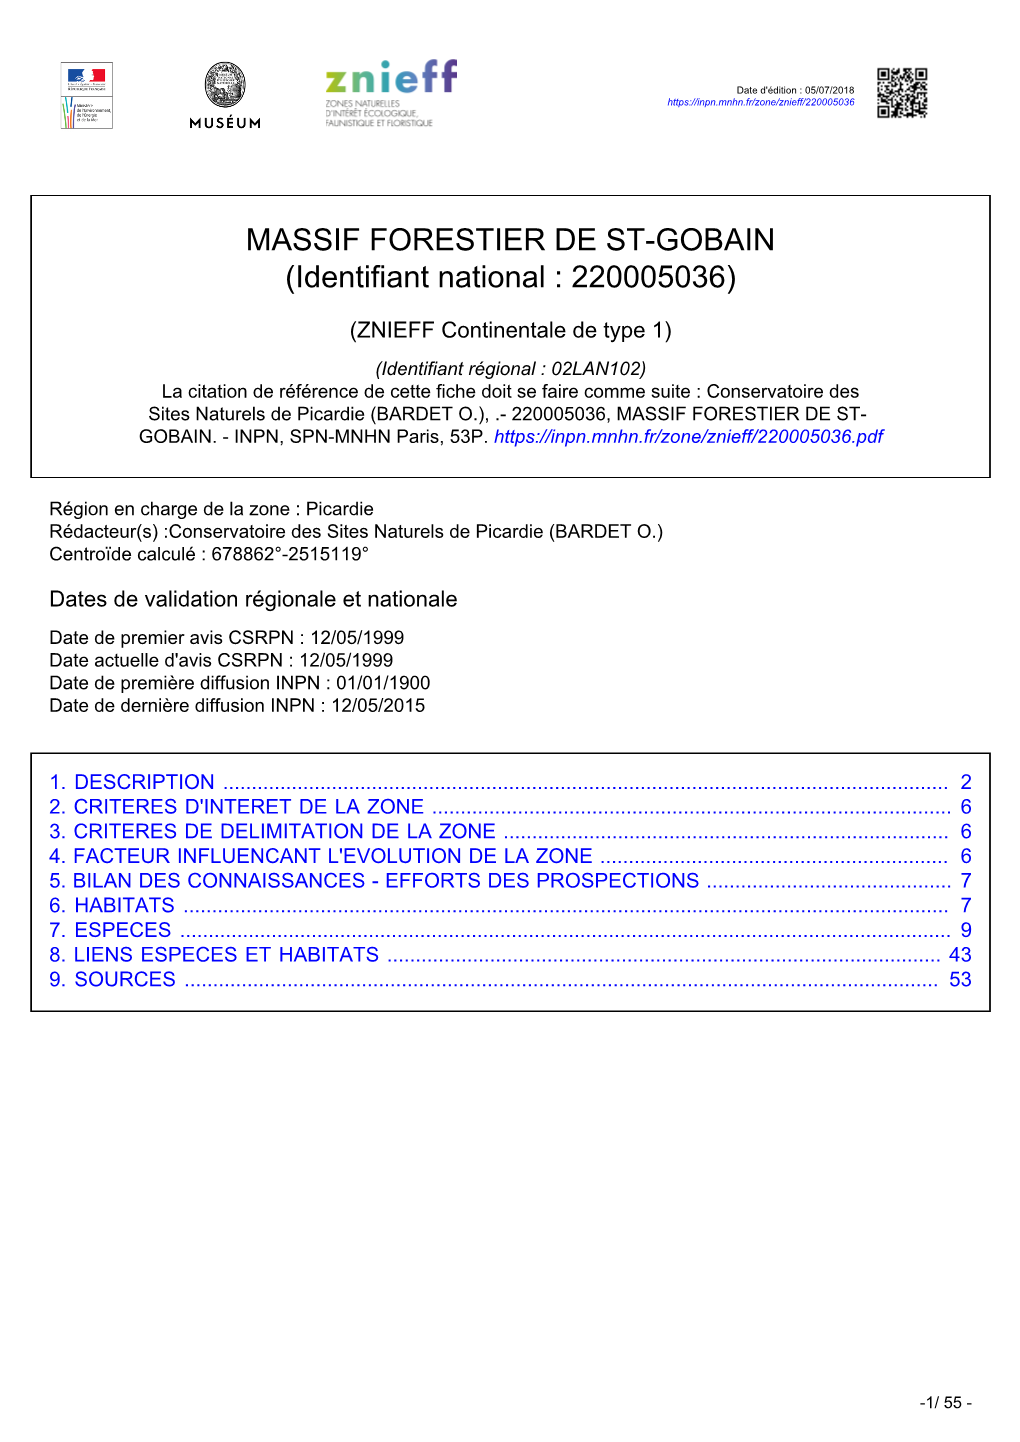 MASSIF FORESTIER DE ST-GOBAIN (Identifiant National : 220005036)